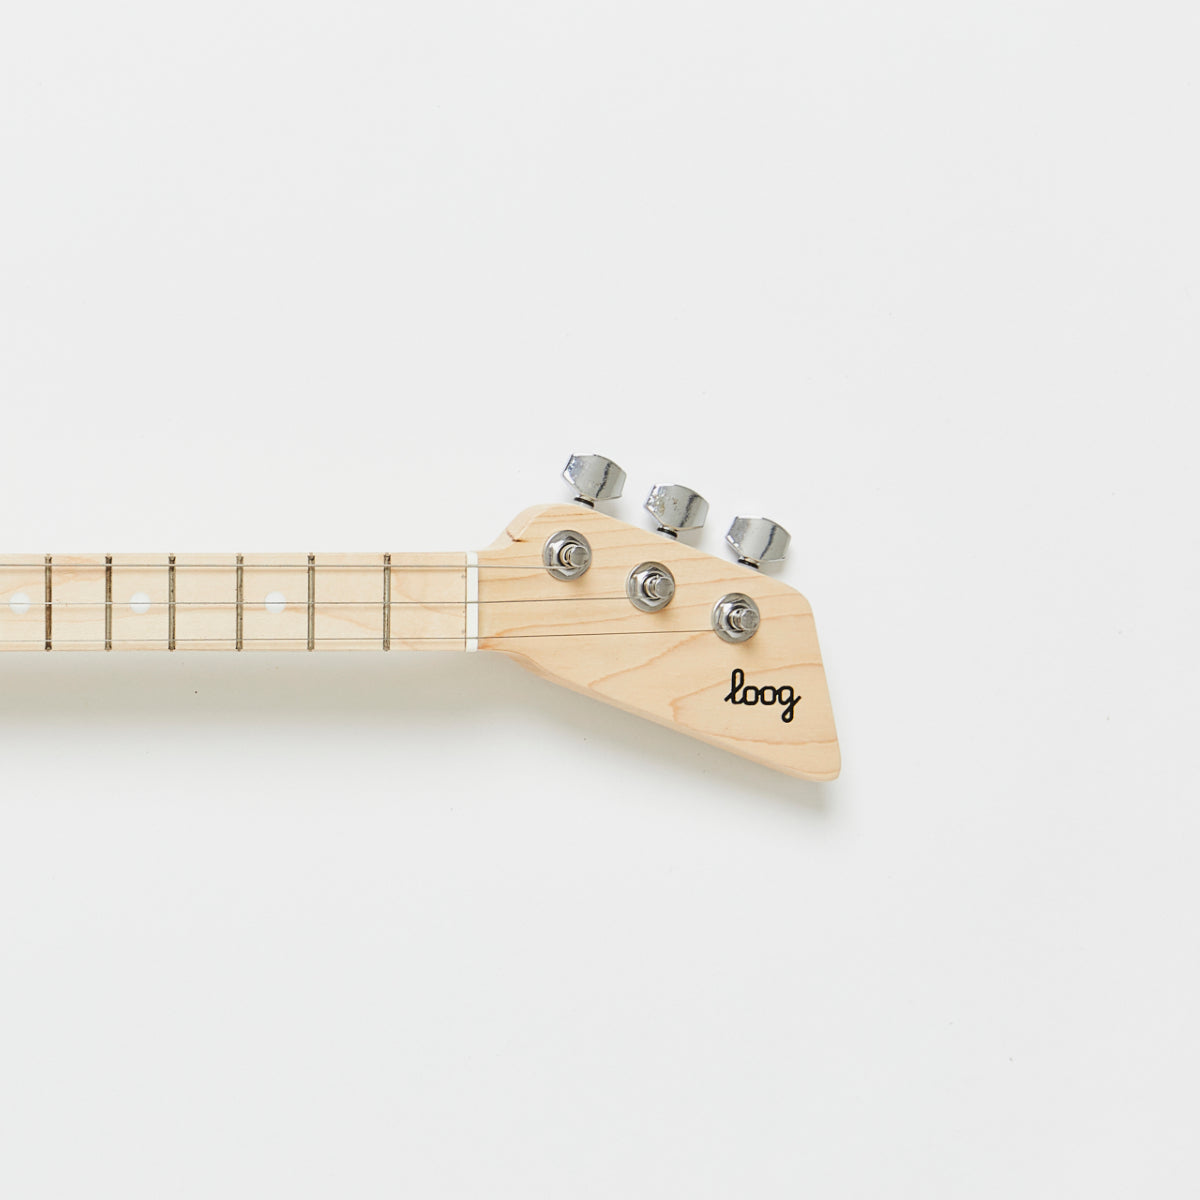 white-guitar-only white-guitar-strap